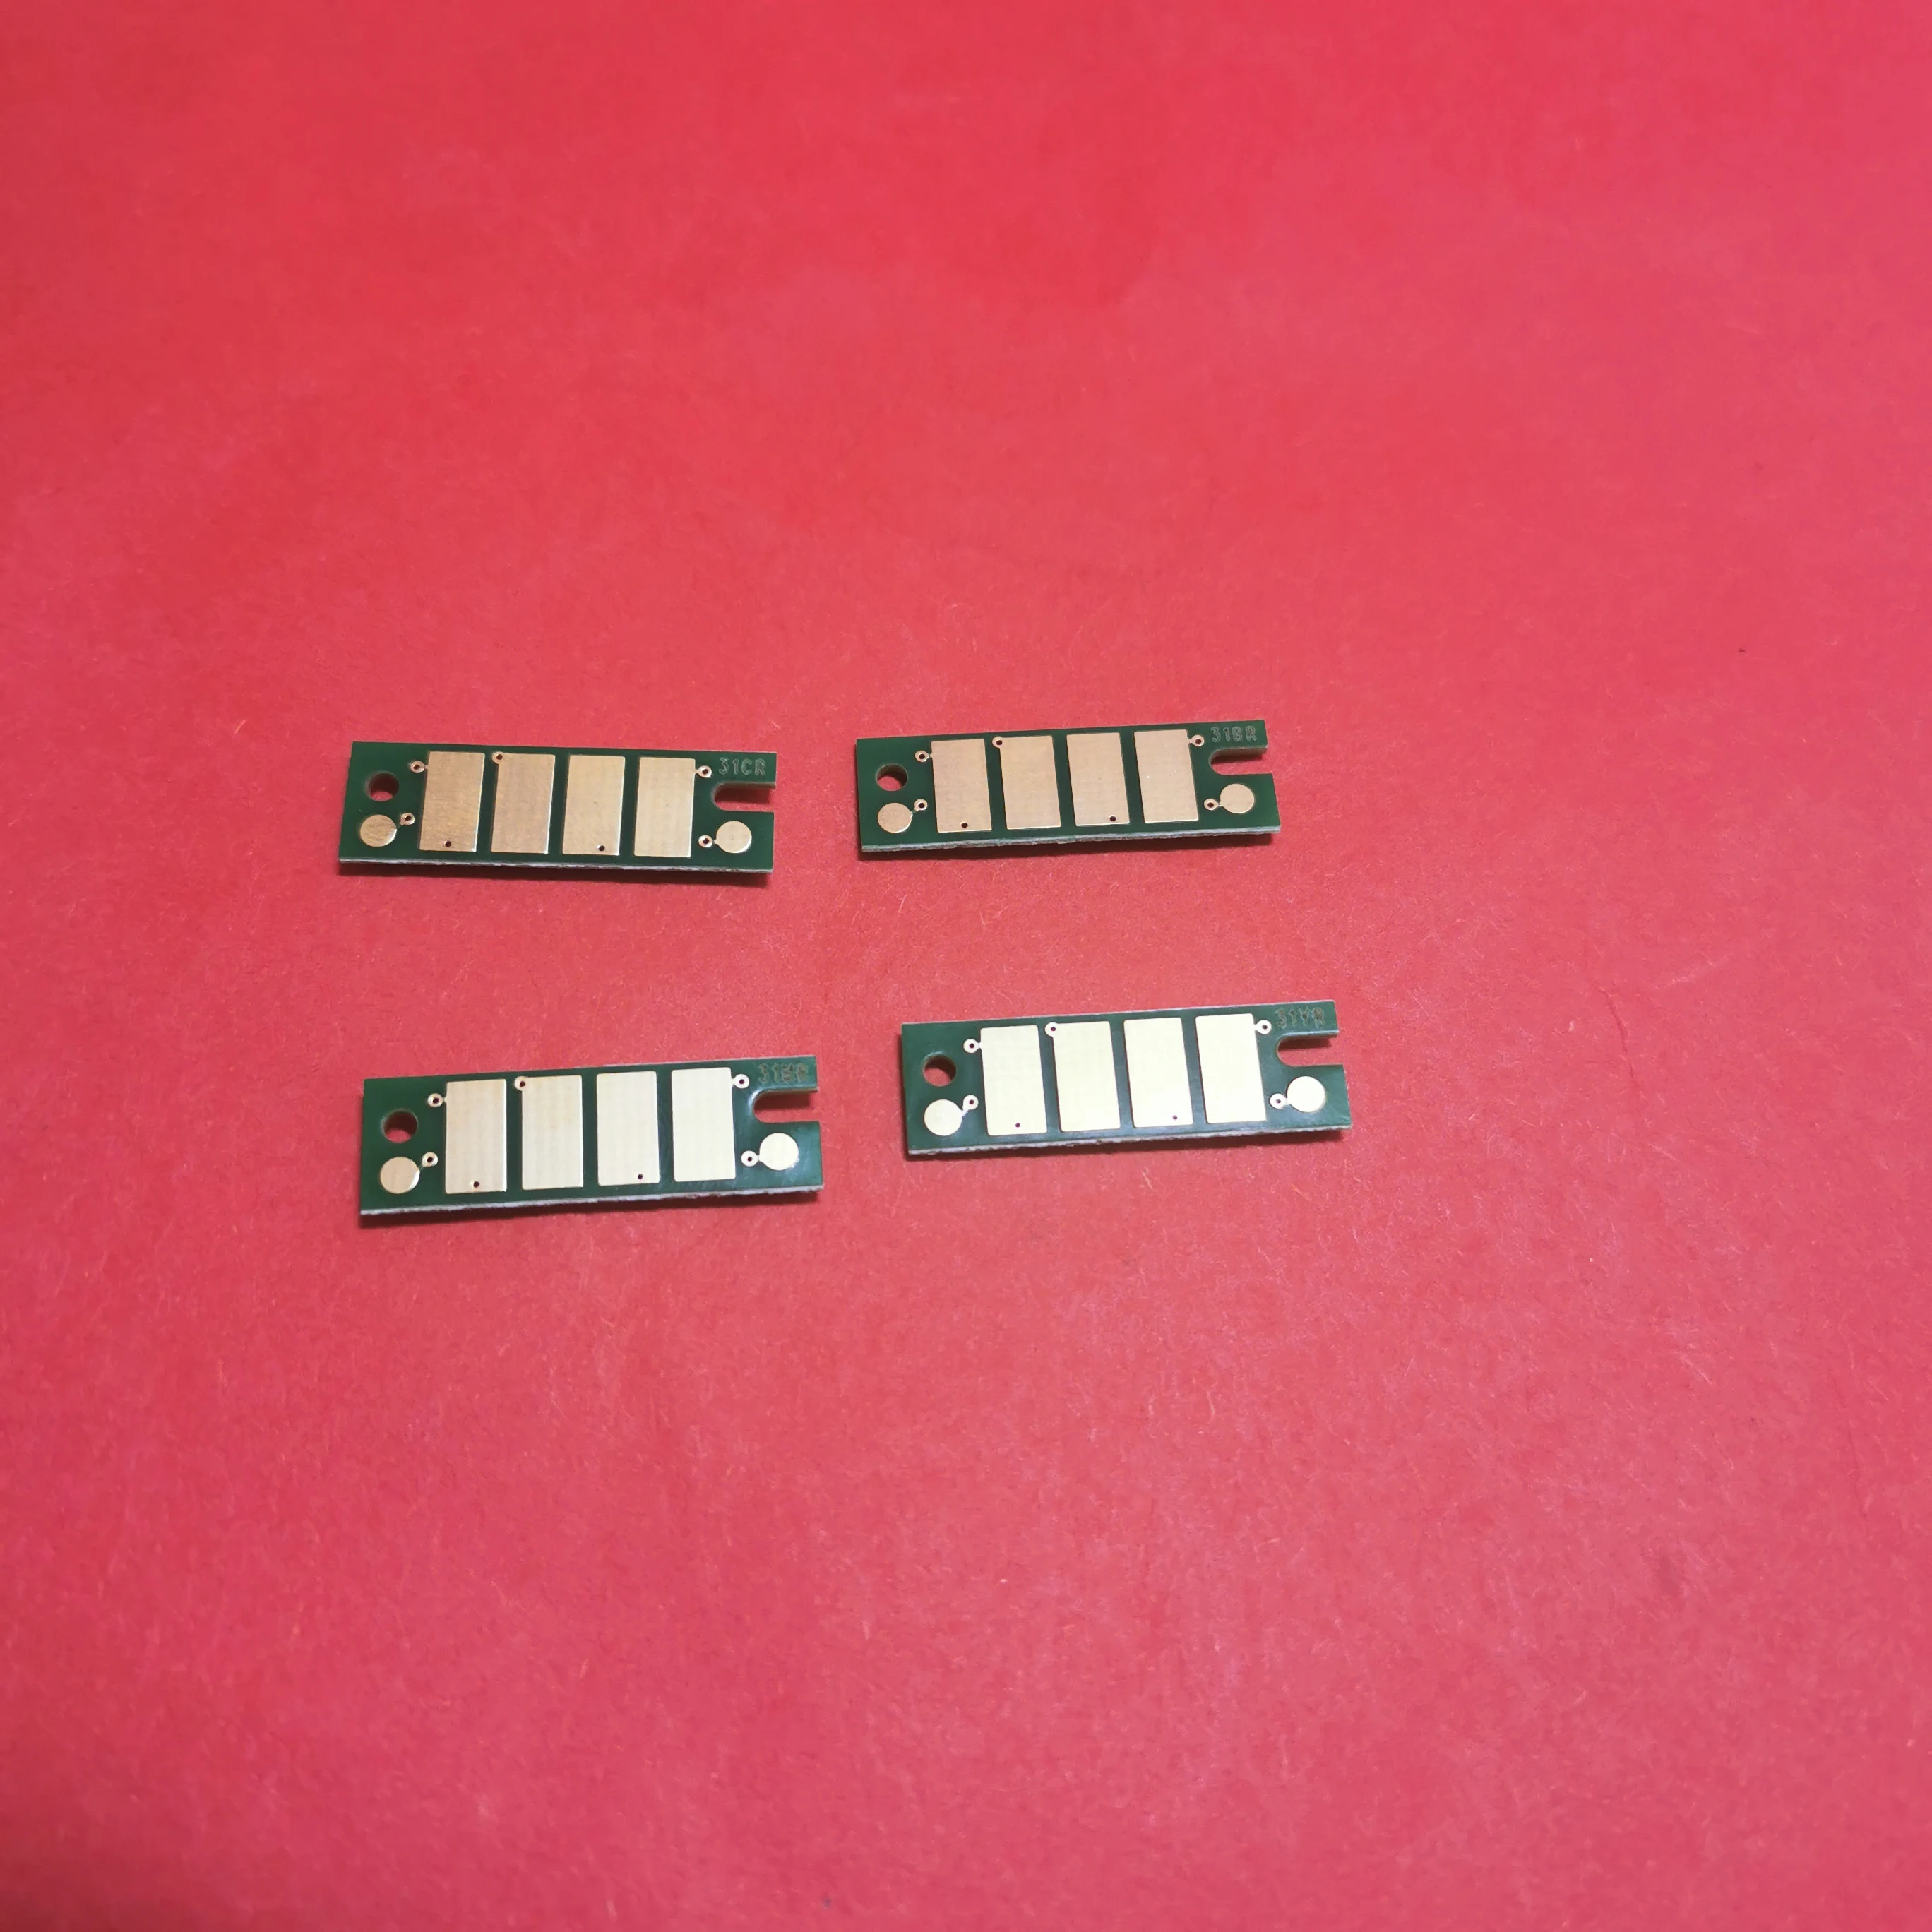 

ARC Chip GC31 GC-31 Chip for ink cartridge for use with Ricoh GX-e7700/e5500/e3300/e2600/SG 5100